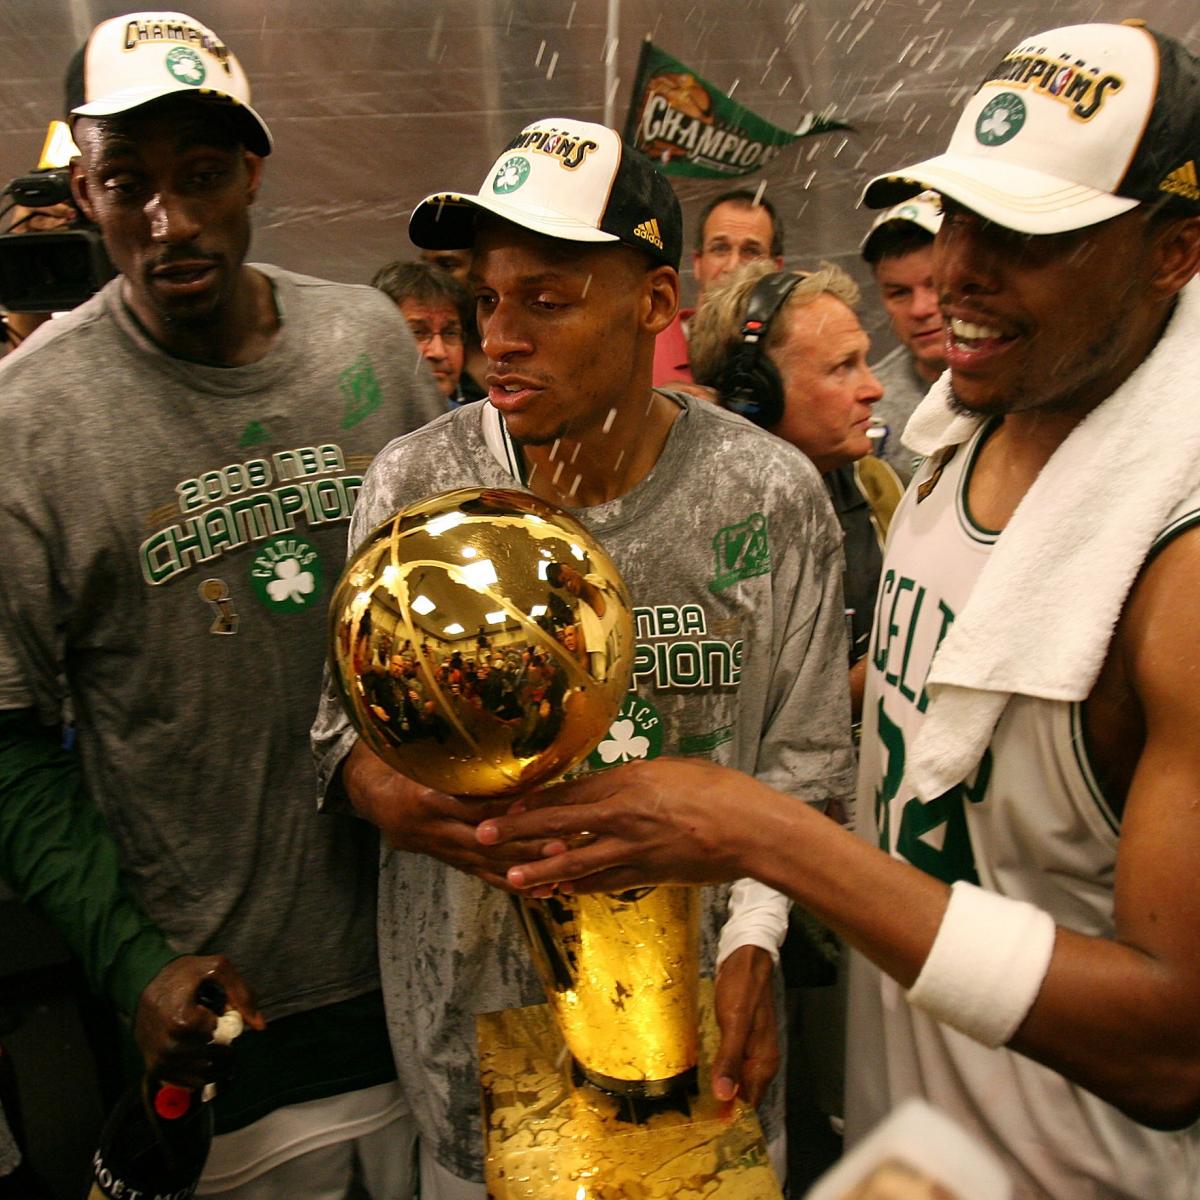 The origin story of the 2008 Boston Celtics' Big Three - The